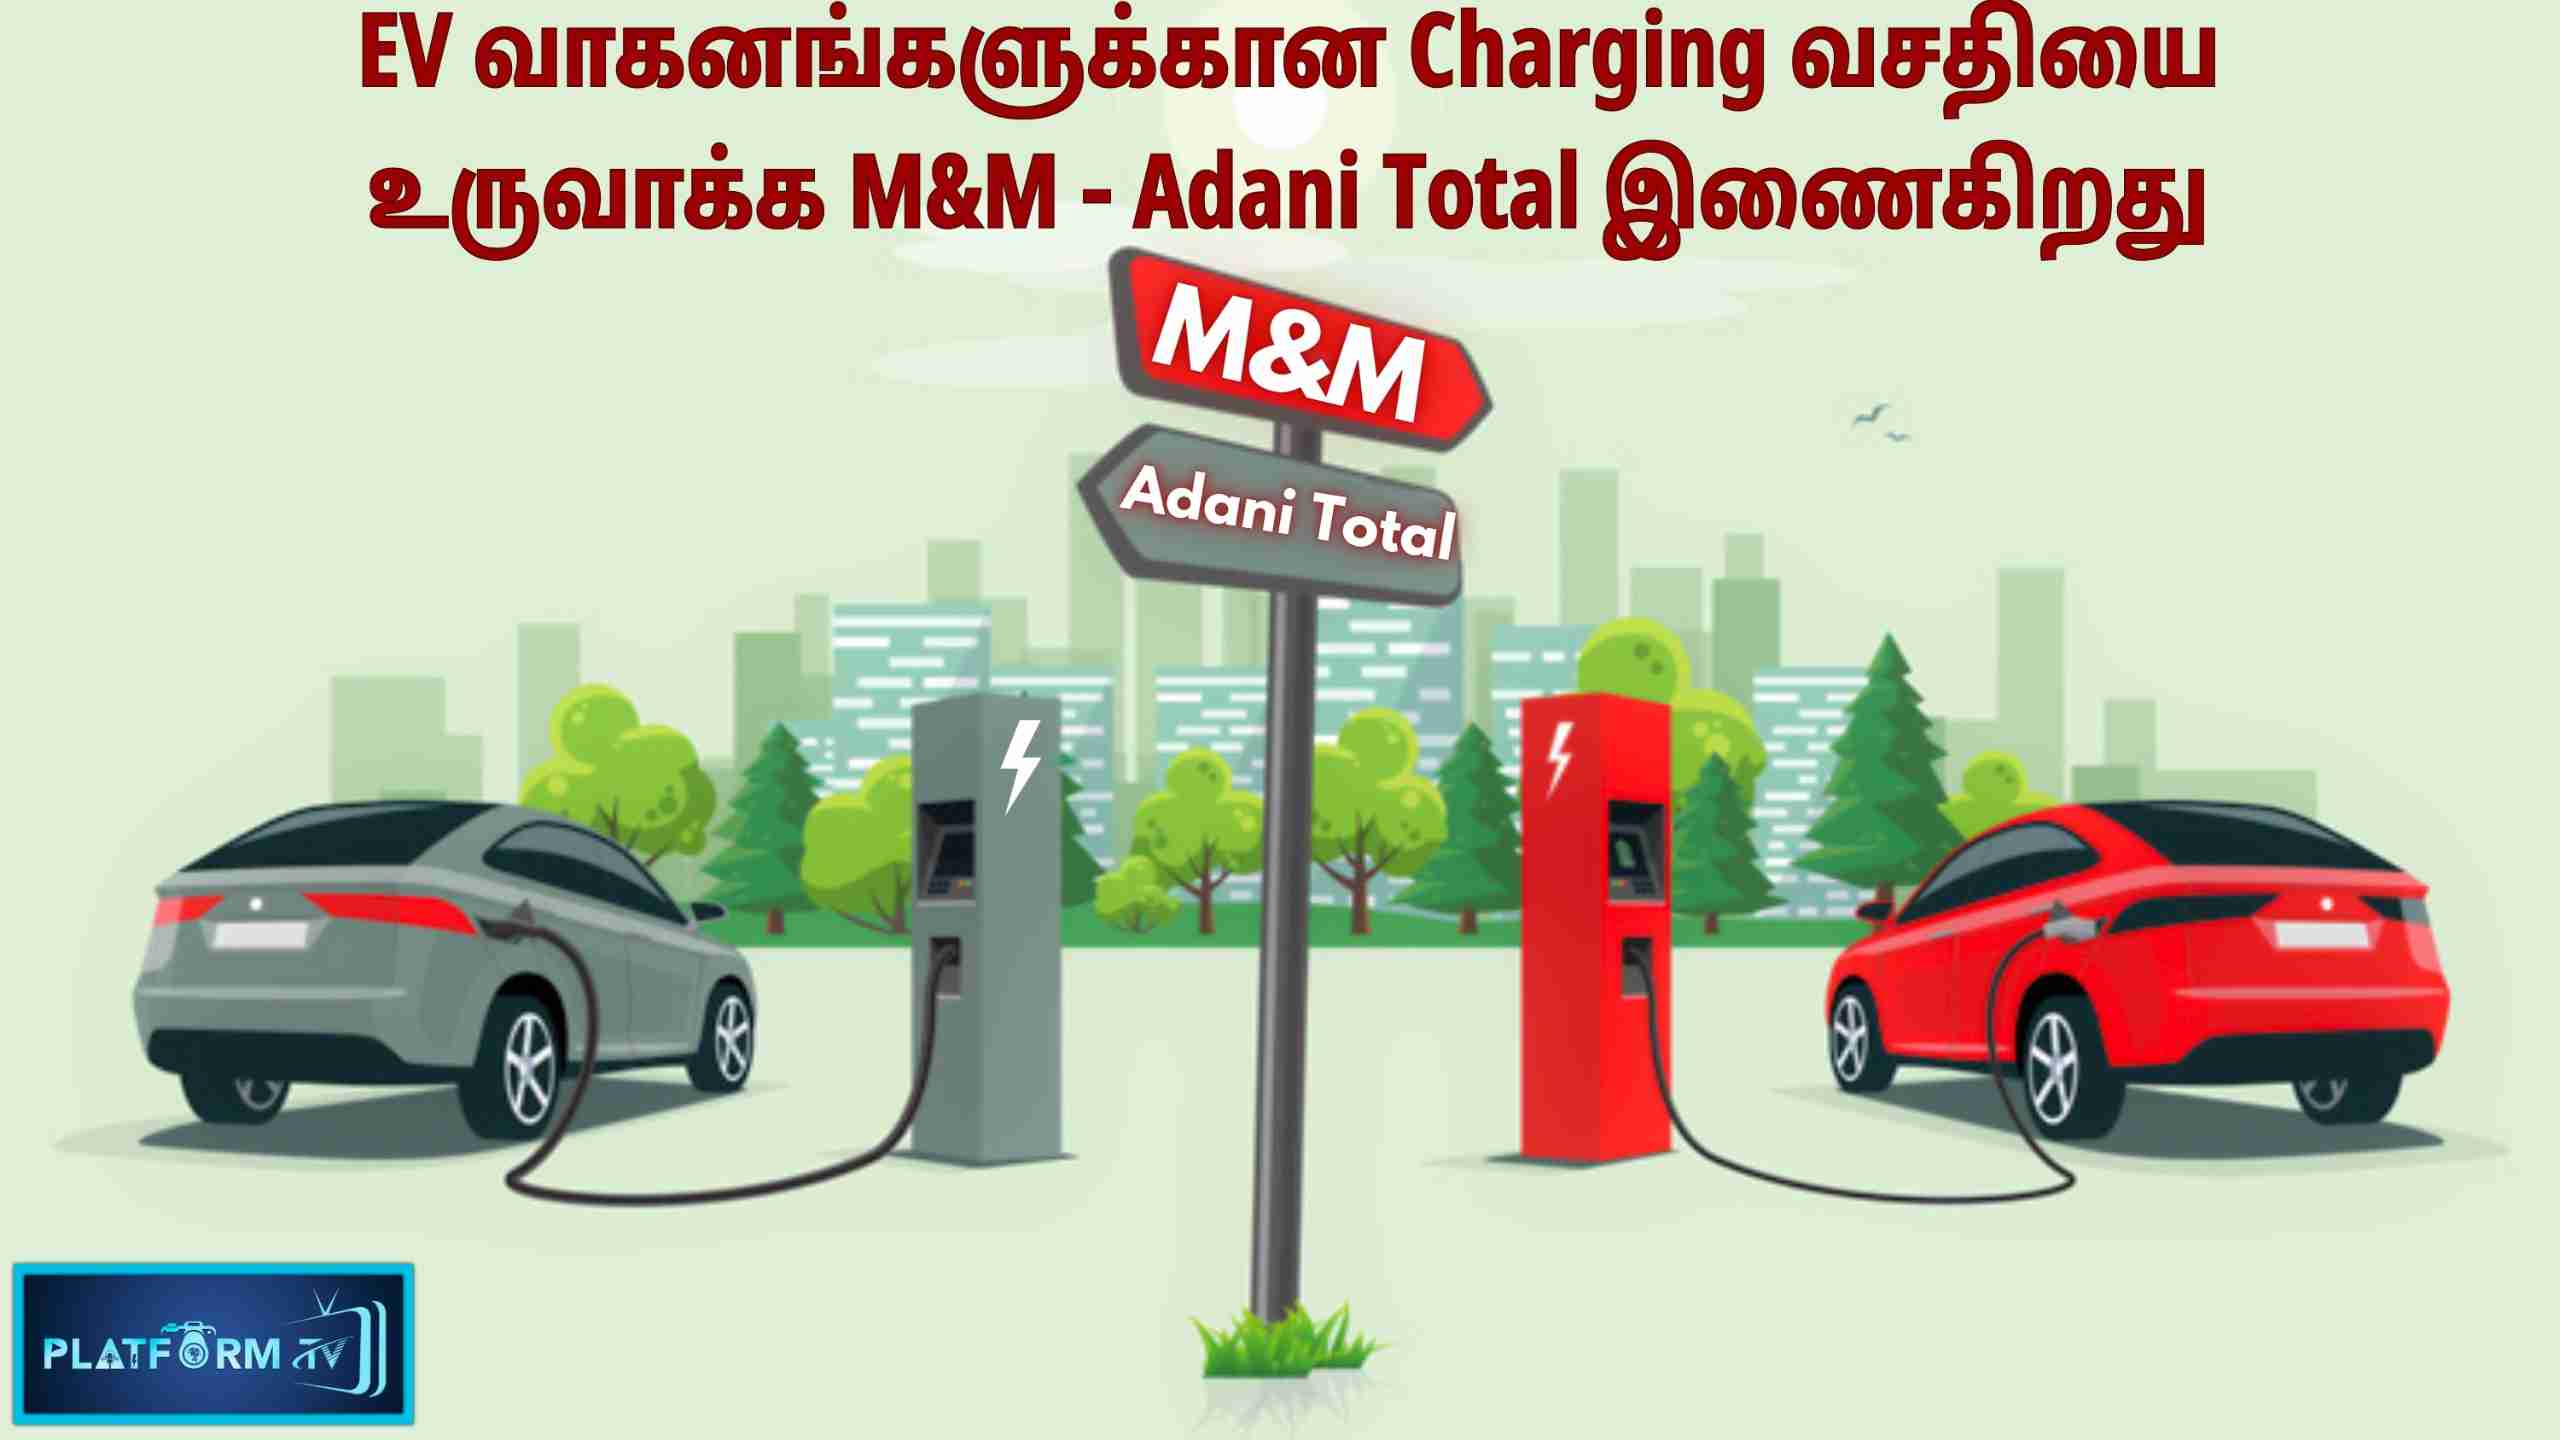 M&M Signs MoU With Adani - Platform Tamil